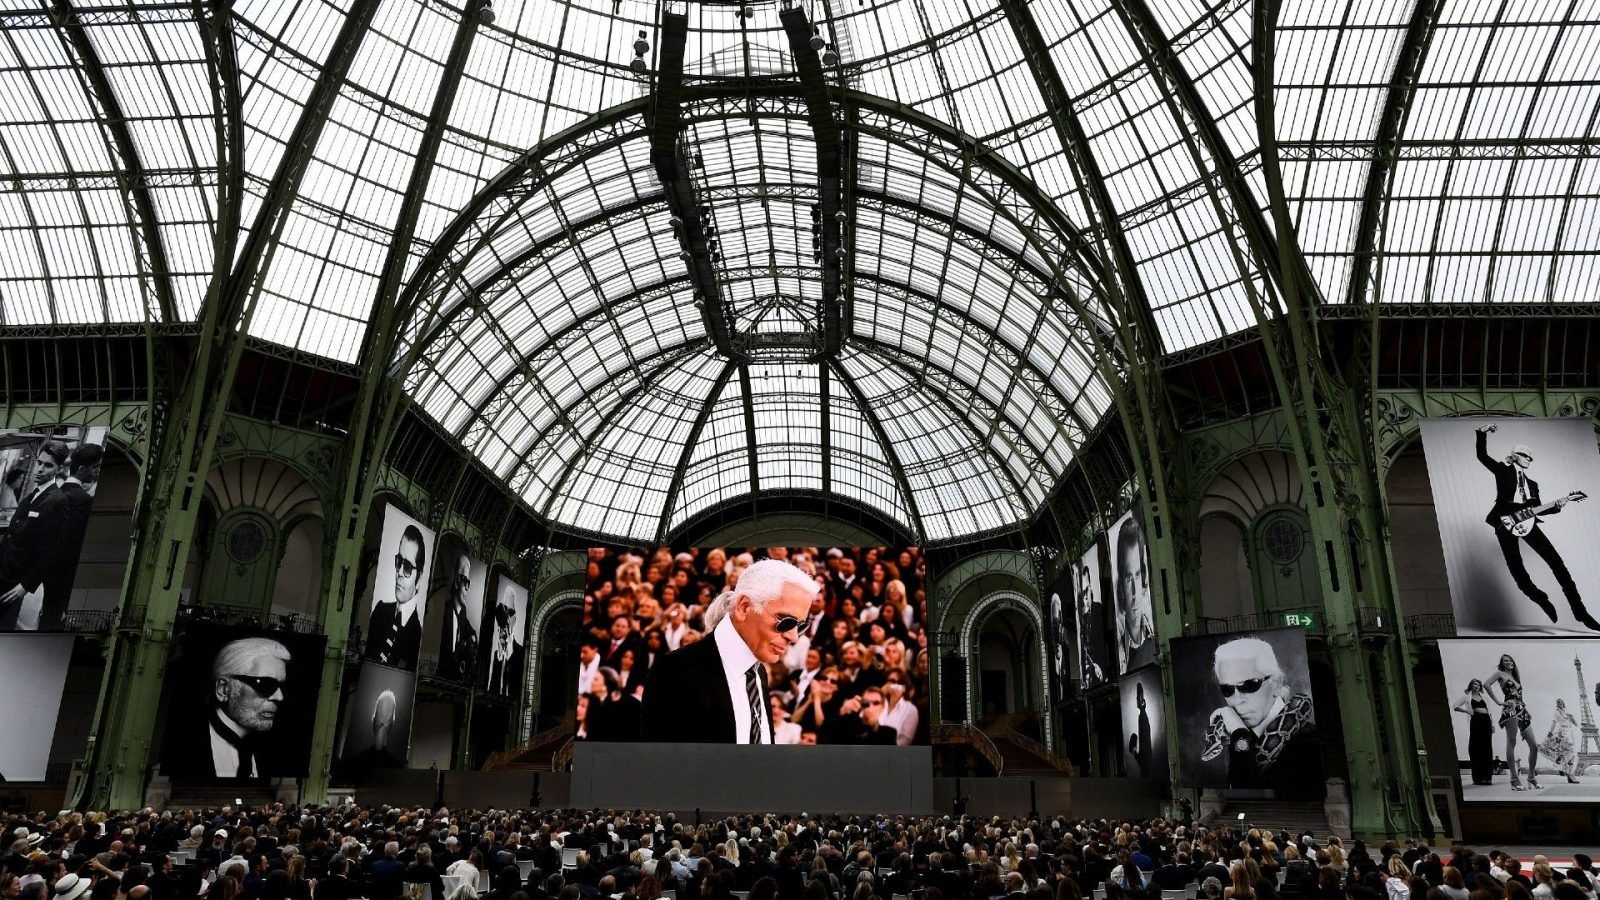 Karl Lagerfeld: Met Gala 2023 to Pay Tribute to Legendary Fashion Designer